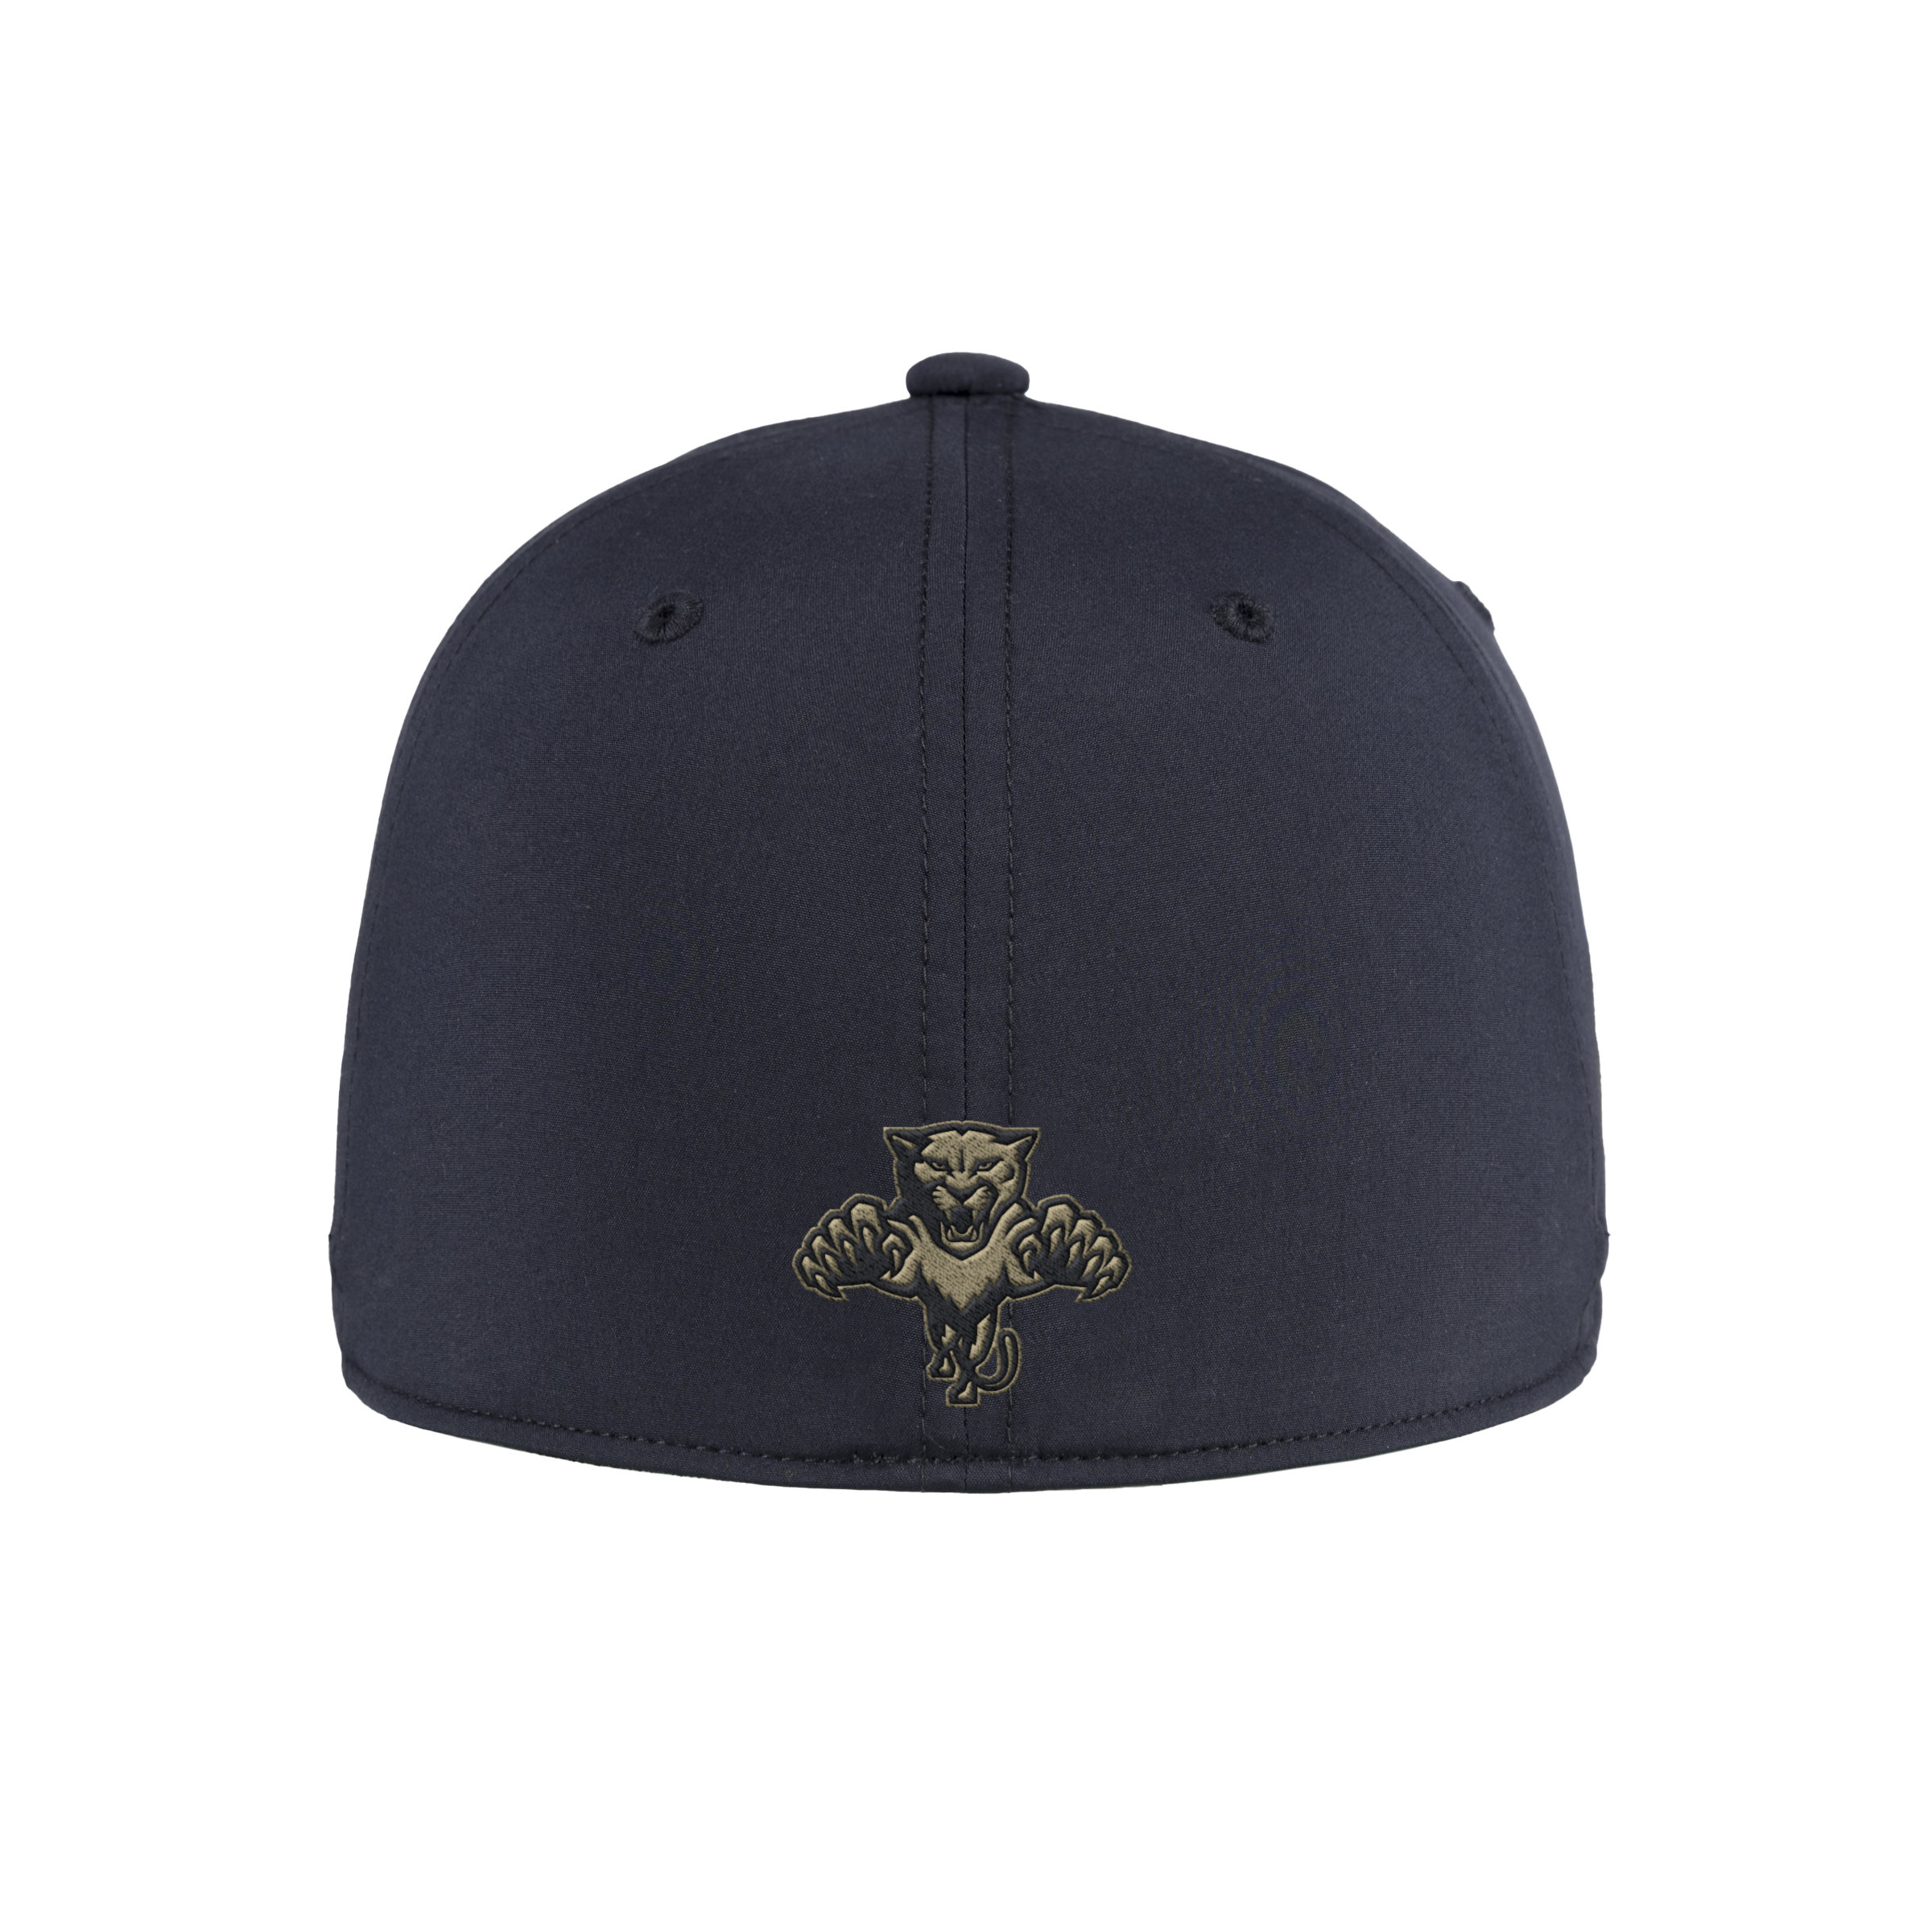 Florida Panthers adidas Military Appreciation Structured Flex Hat - Camo